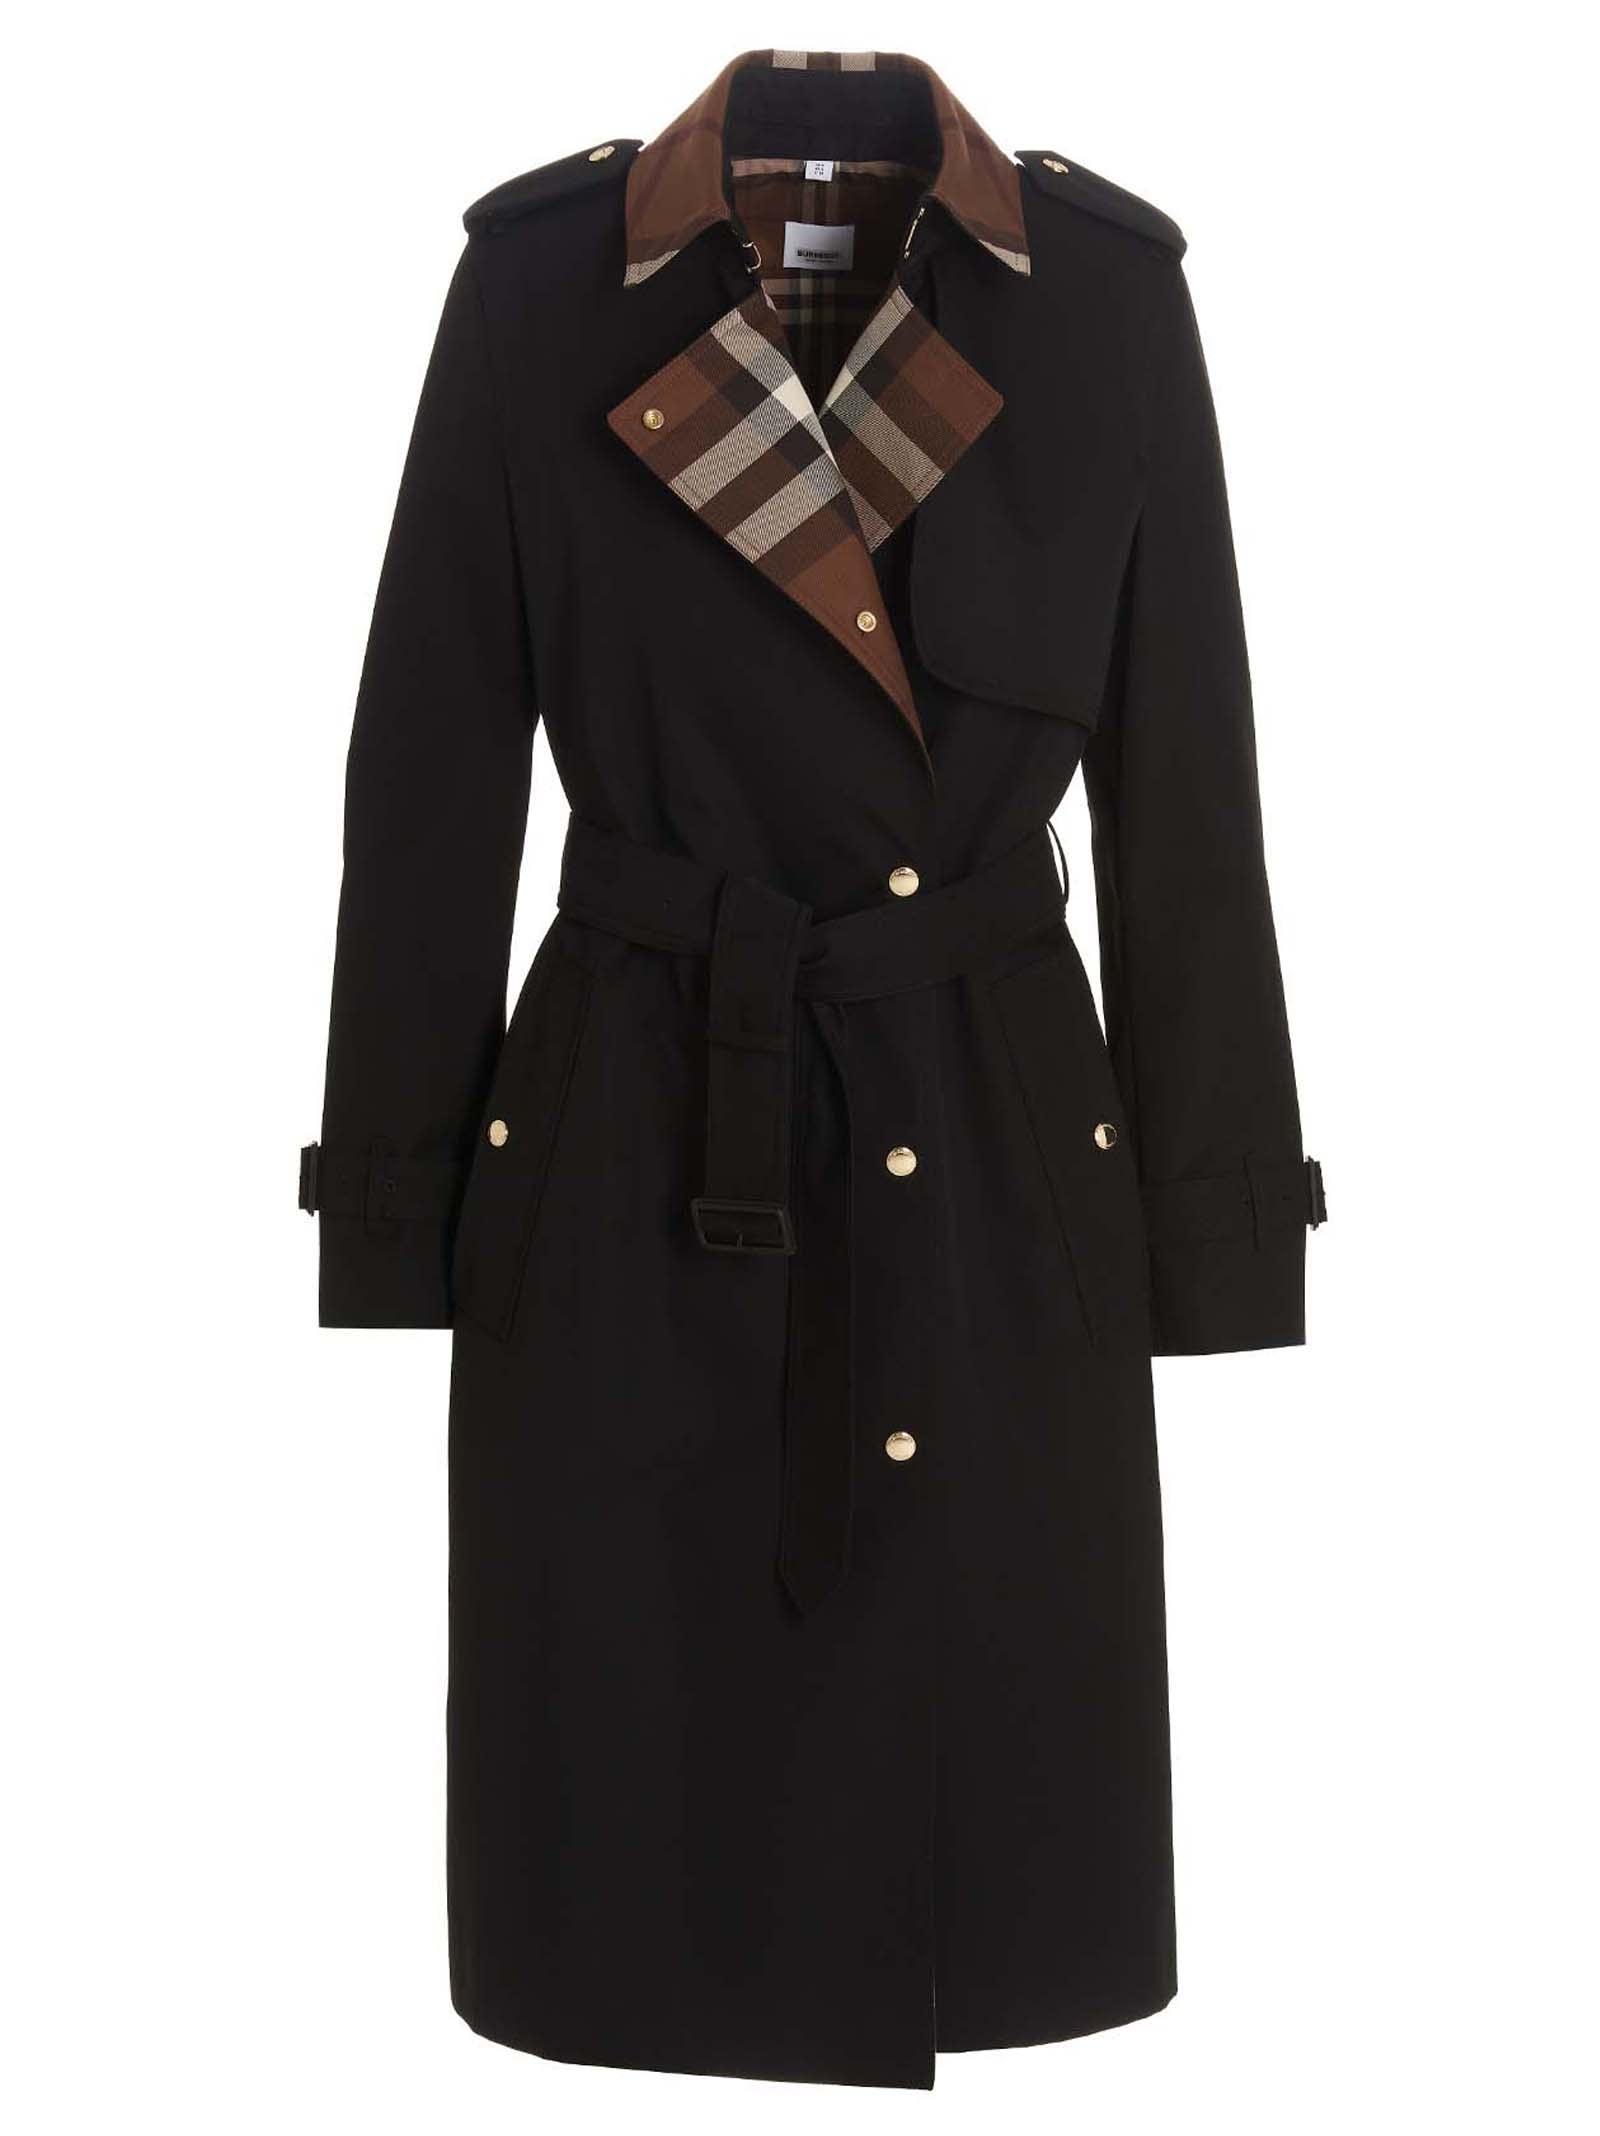 Burberry Sandridge Trench Coat in Black | Lyst